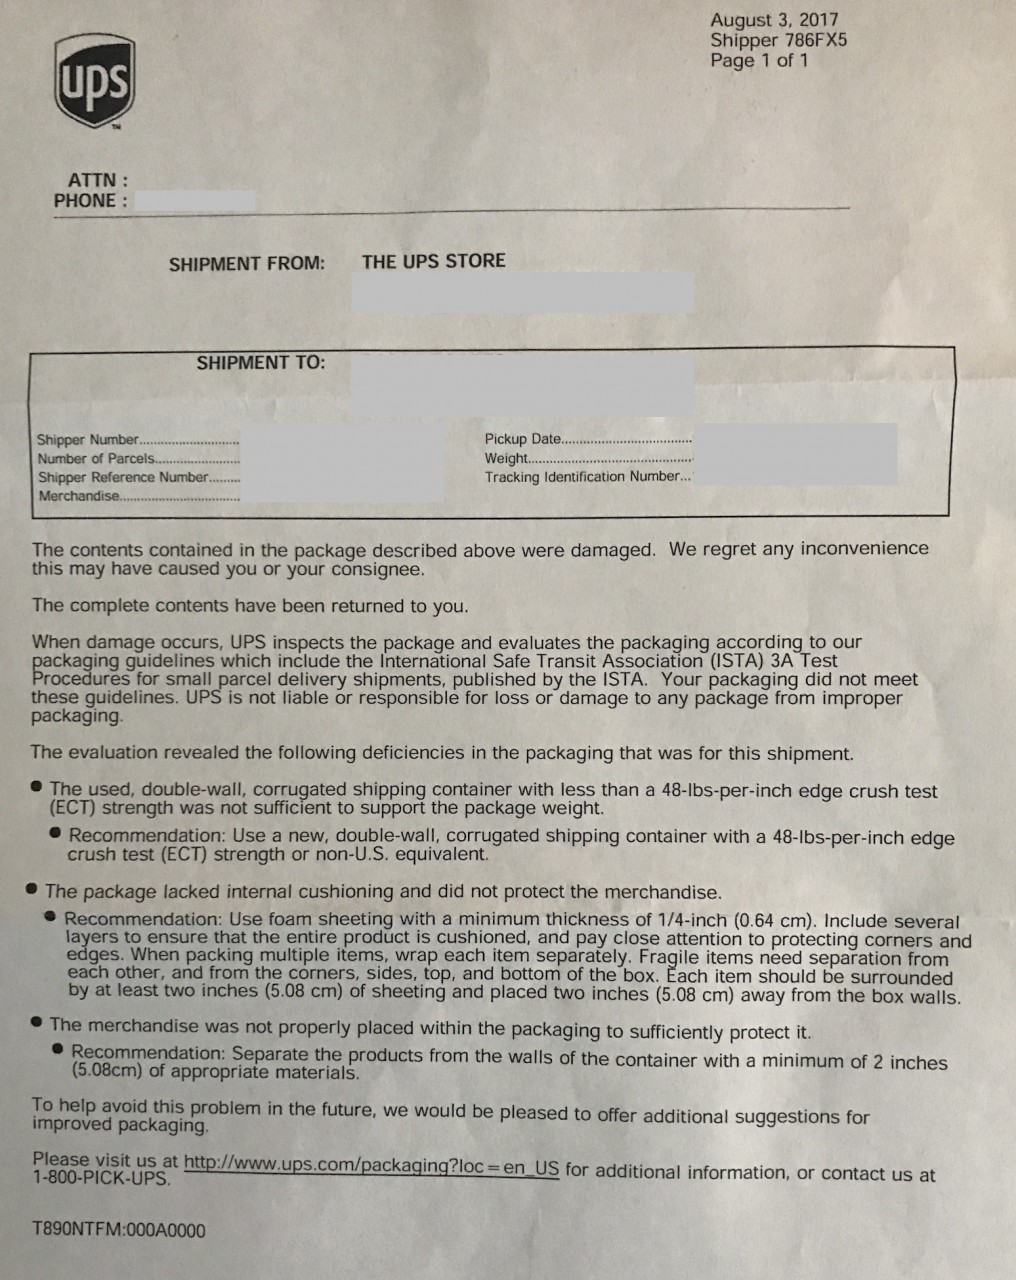 UPS claim form determination summary